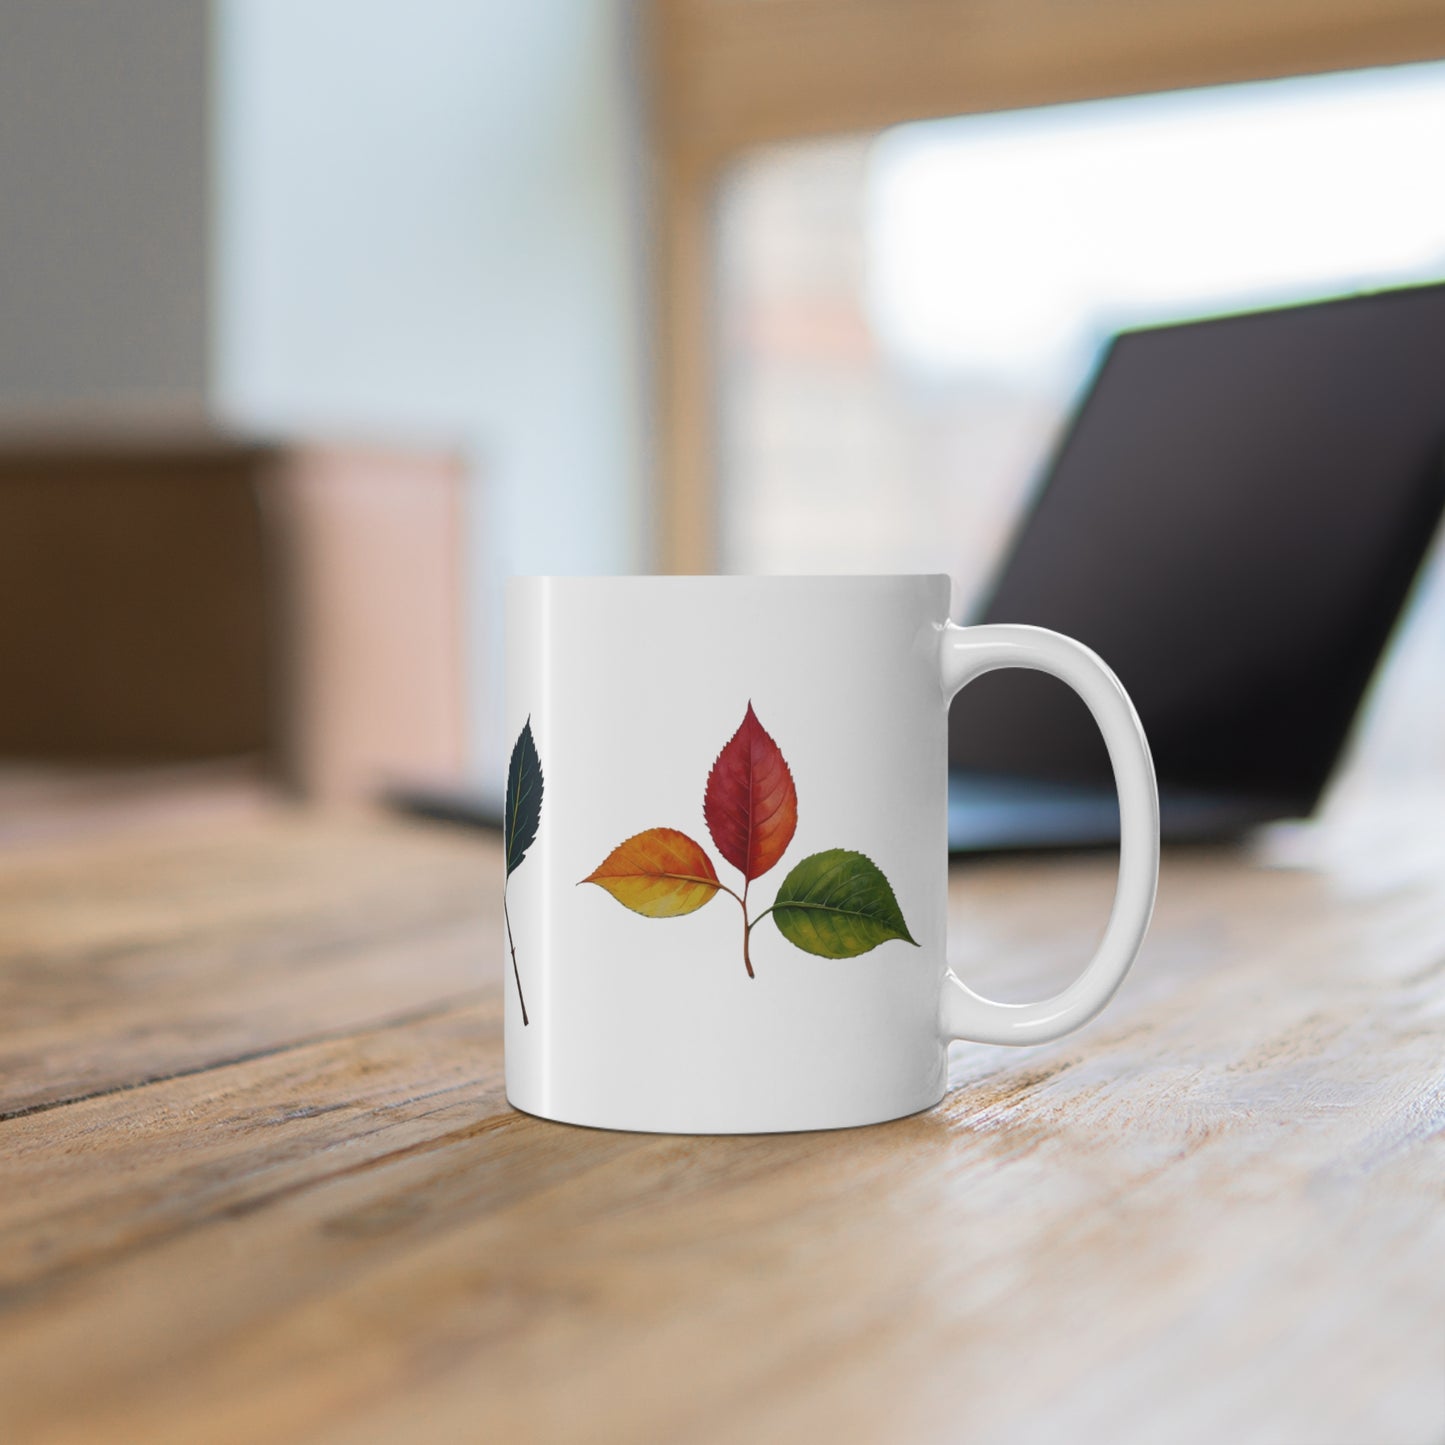 Colourful Ash Leaves Mug - Ceramic Coffee Mug 11oz